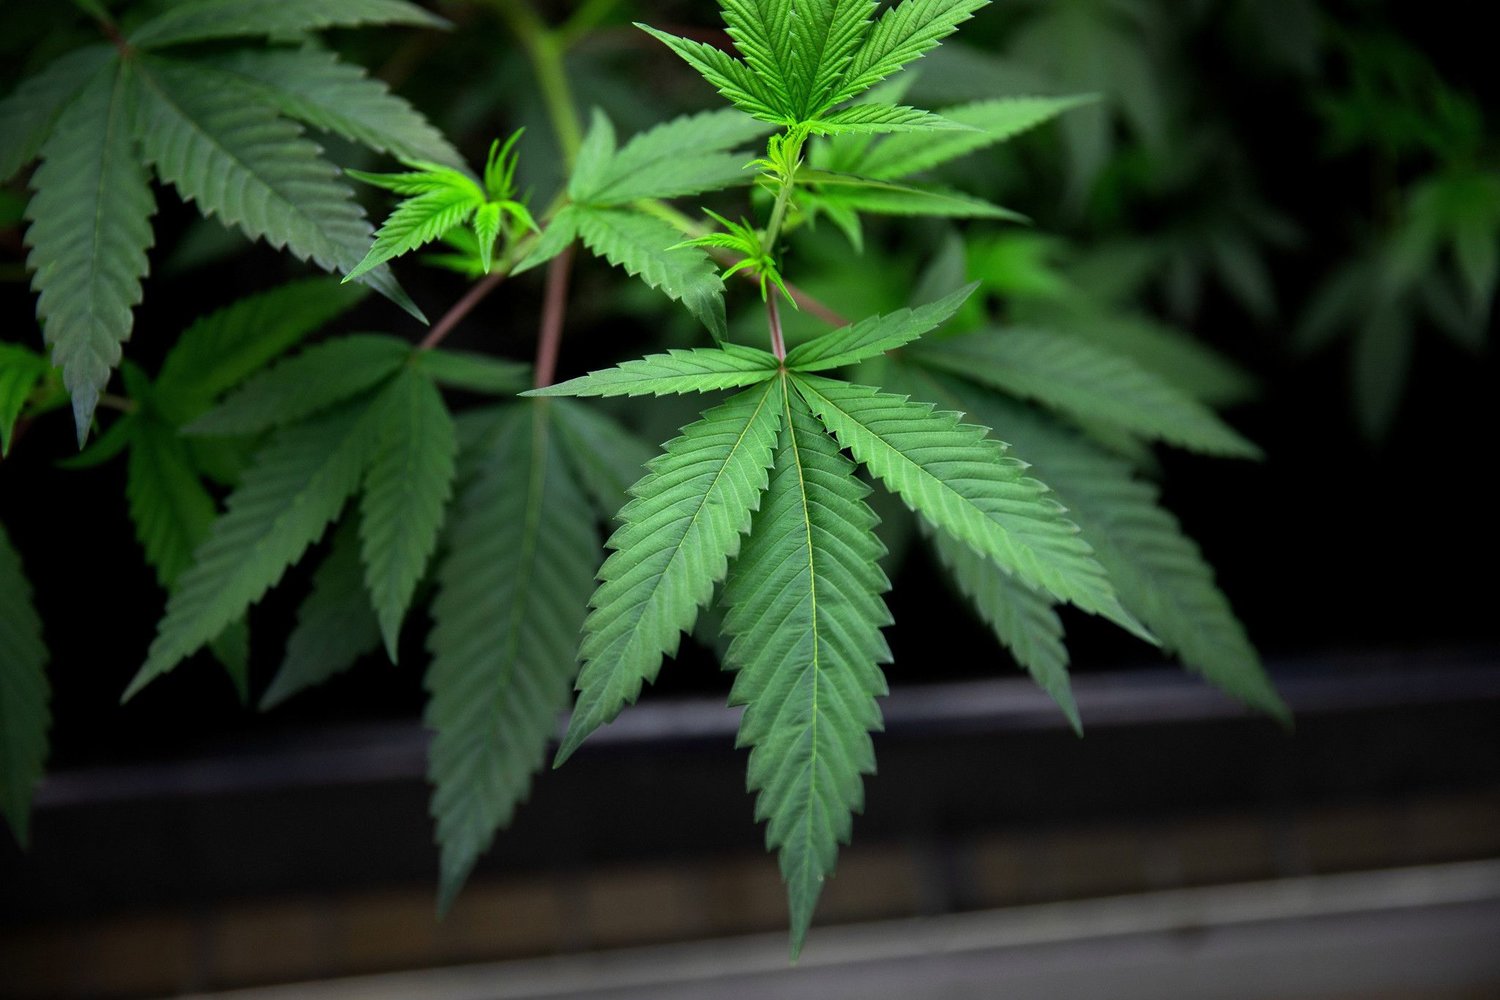 Marijuana plants grow under lights at a medical marijuana cultivation facility Aug. 8, 2018, in Joliet, Illinois. (Erin Hooley/Chicago Tribune/TNS)